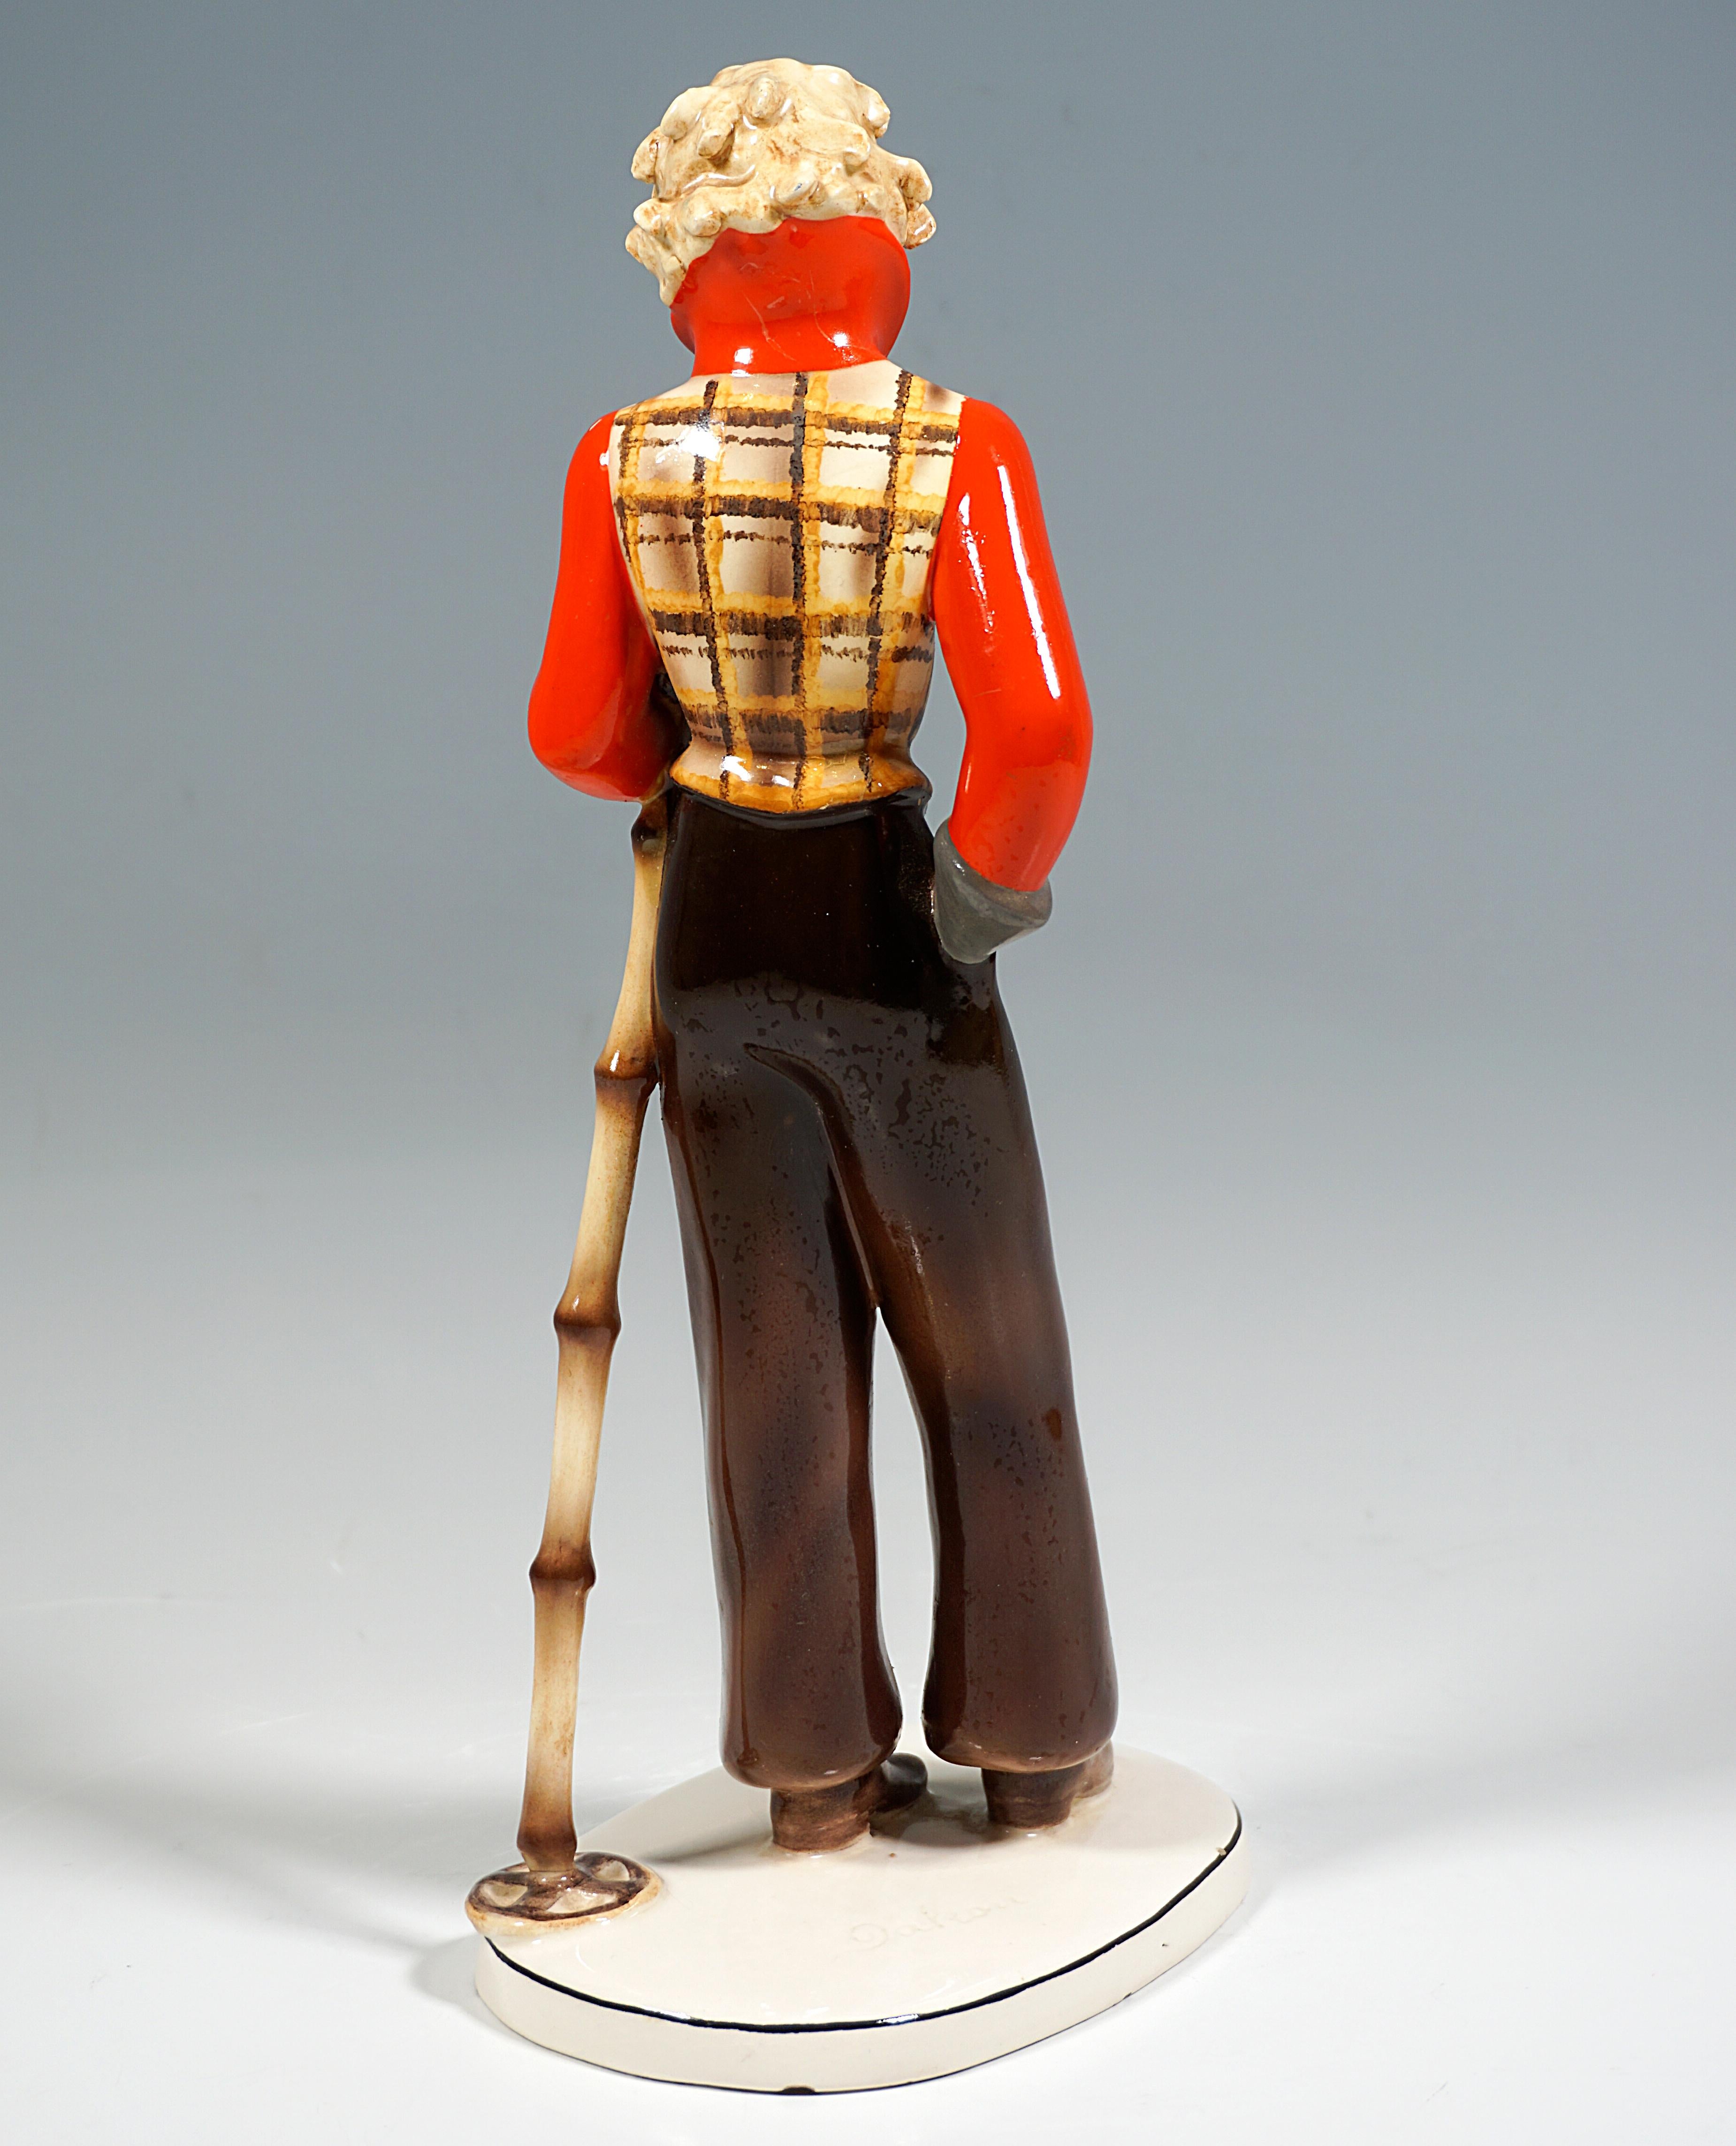 Austrian Goldscheider Vienna Ceramic Figurine, Lady Skier, by Stephan Dakon, circa 1935